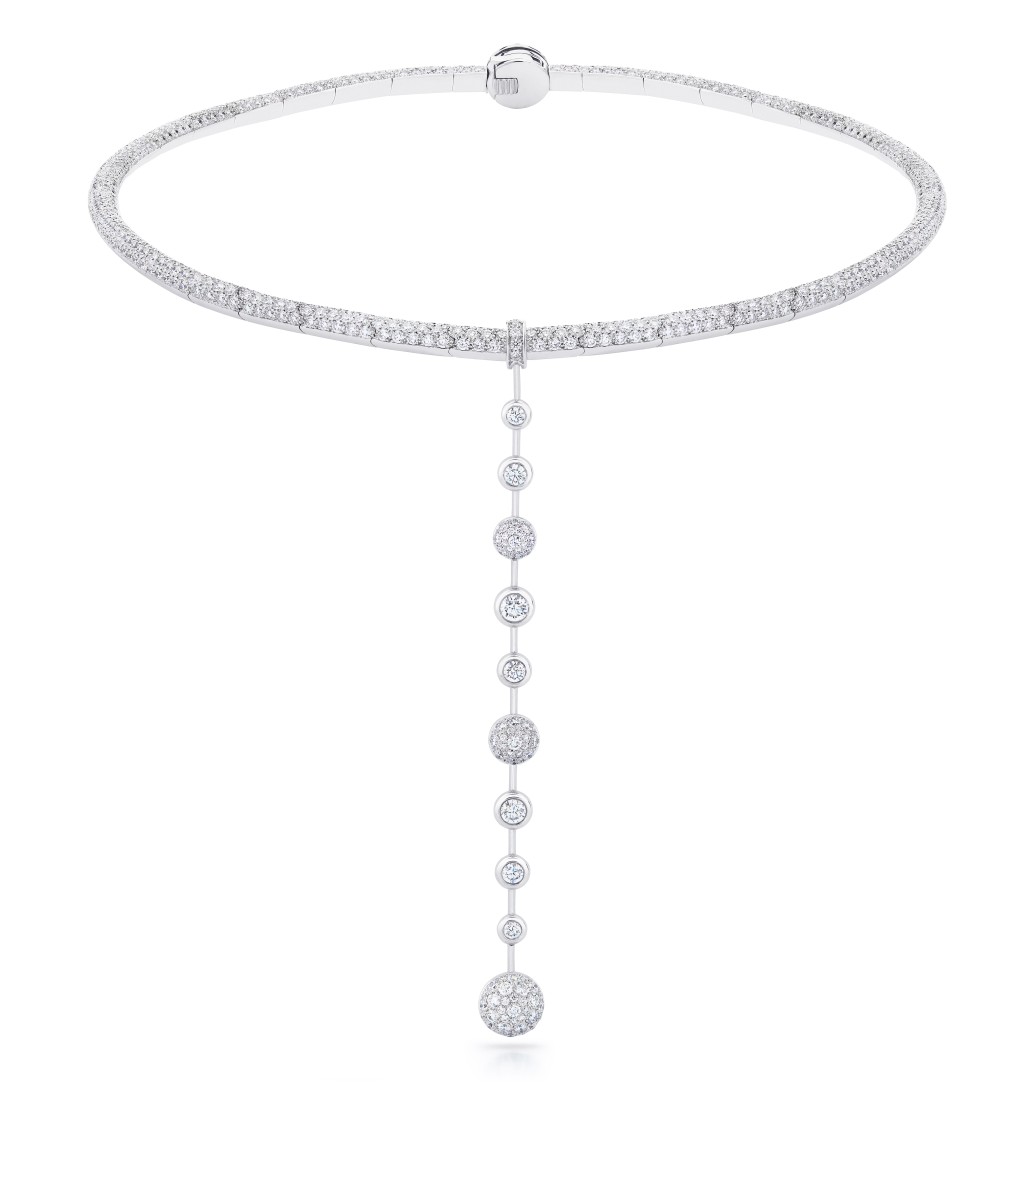 Atomique白金钻石项链/$1,025,000，灵感源自钻石的内部晶体结构。当中垂悬而下的圆形明亮式钻石綫条，可从项链拆下，并连接两个耳钉，营造不对称的独特造型。